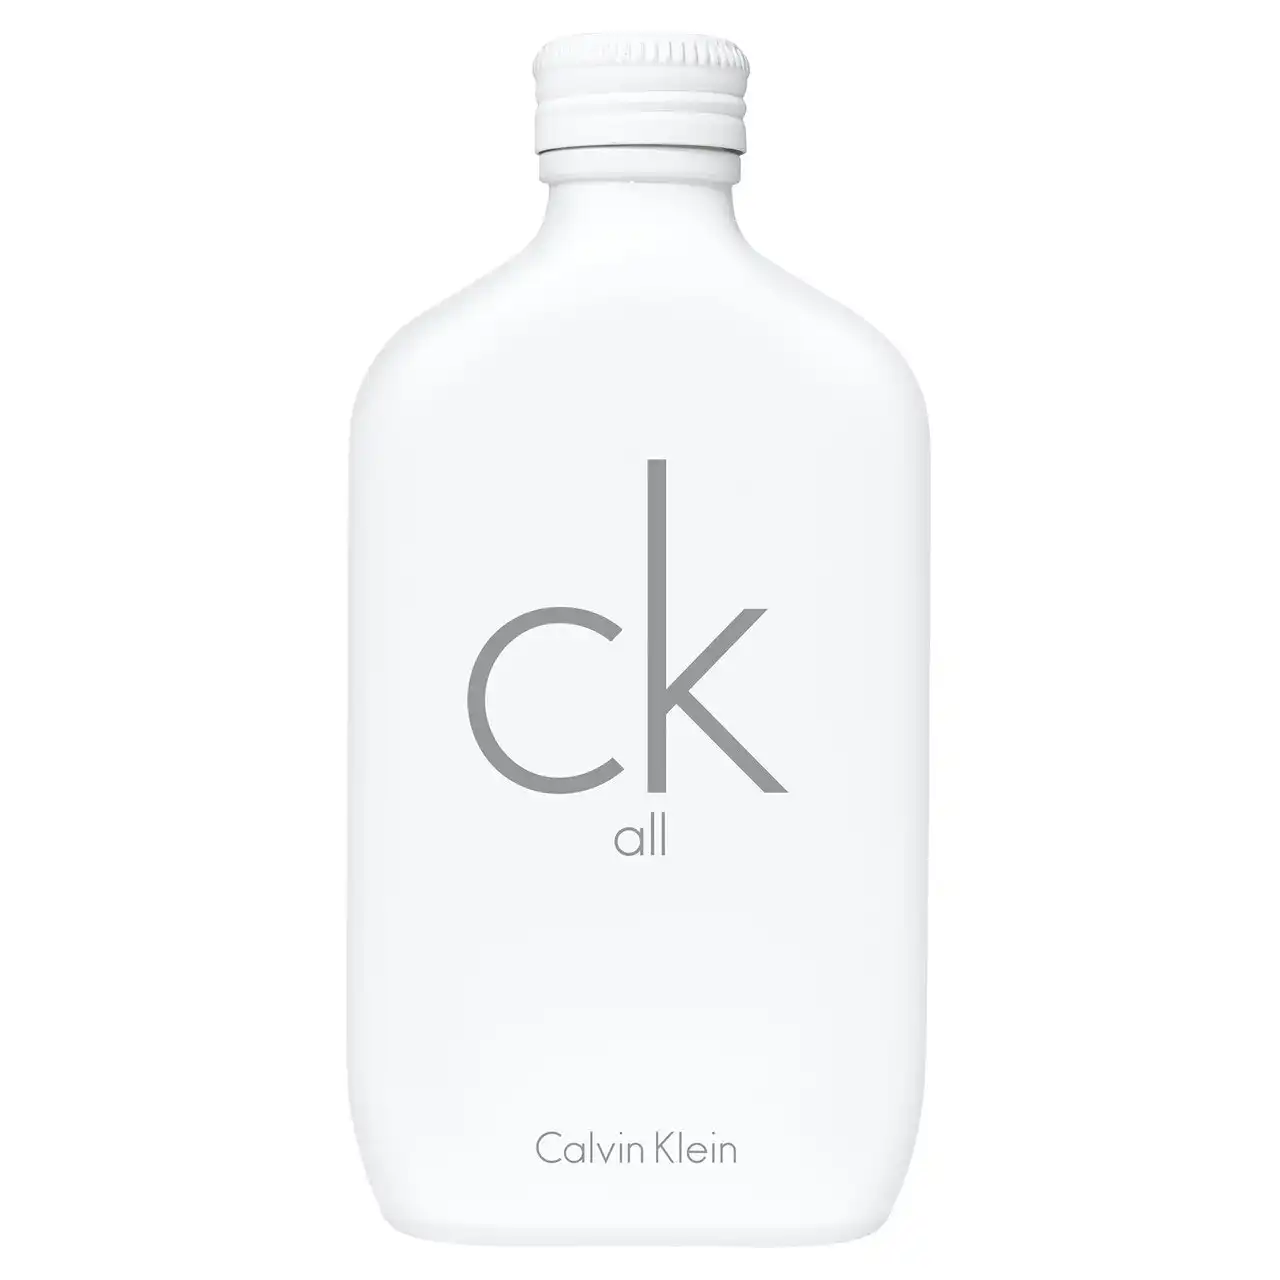 Calvin Klein CK ALL Eau de Toilette 200ml